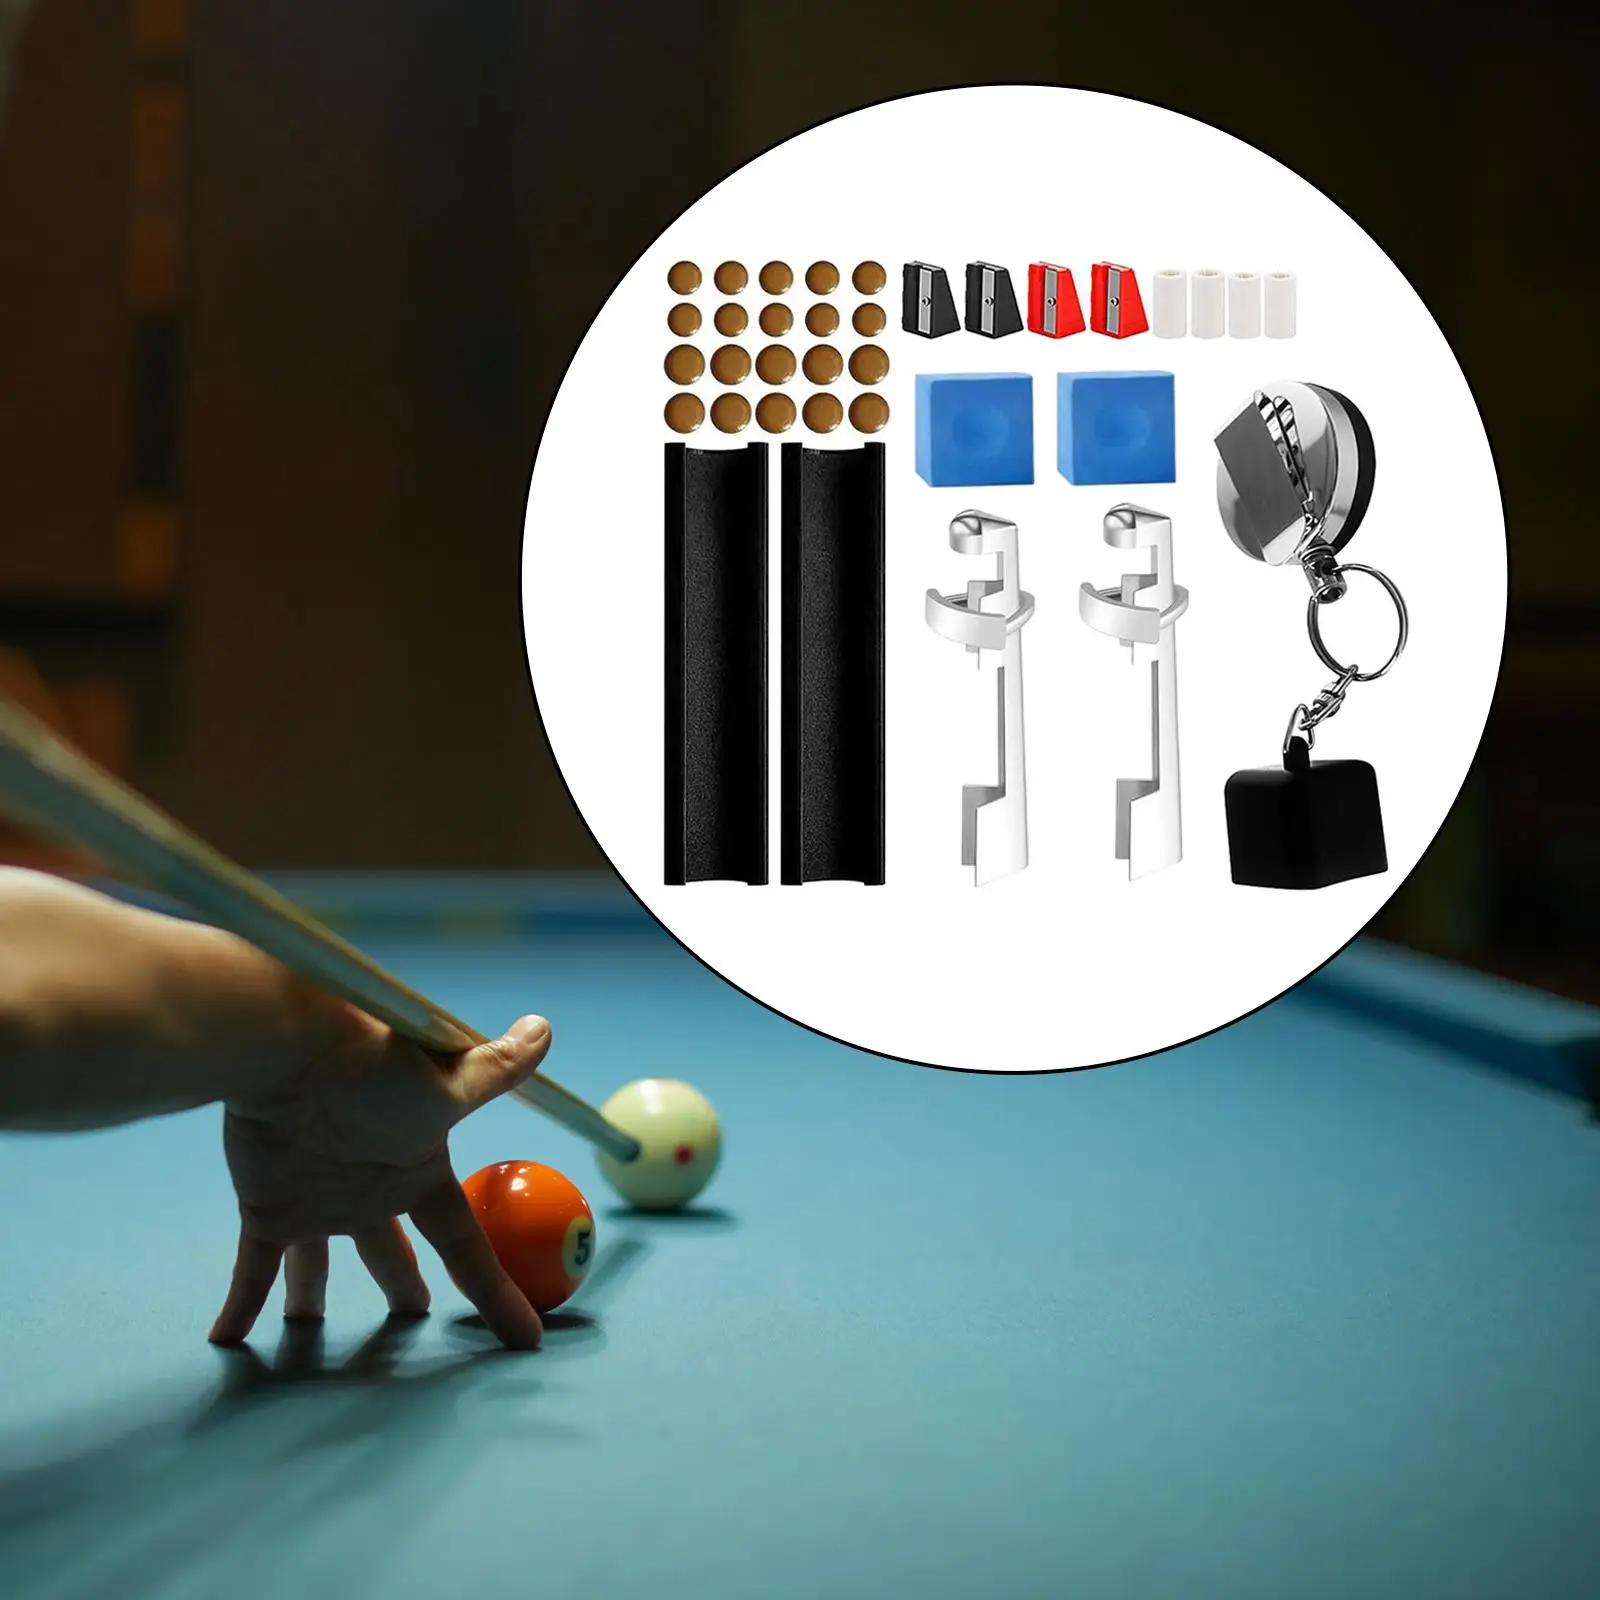 35Pcs Pool Cue Repair Kit for Billiard Table Training Enthusiasts Billiards